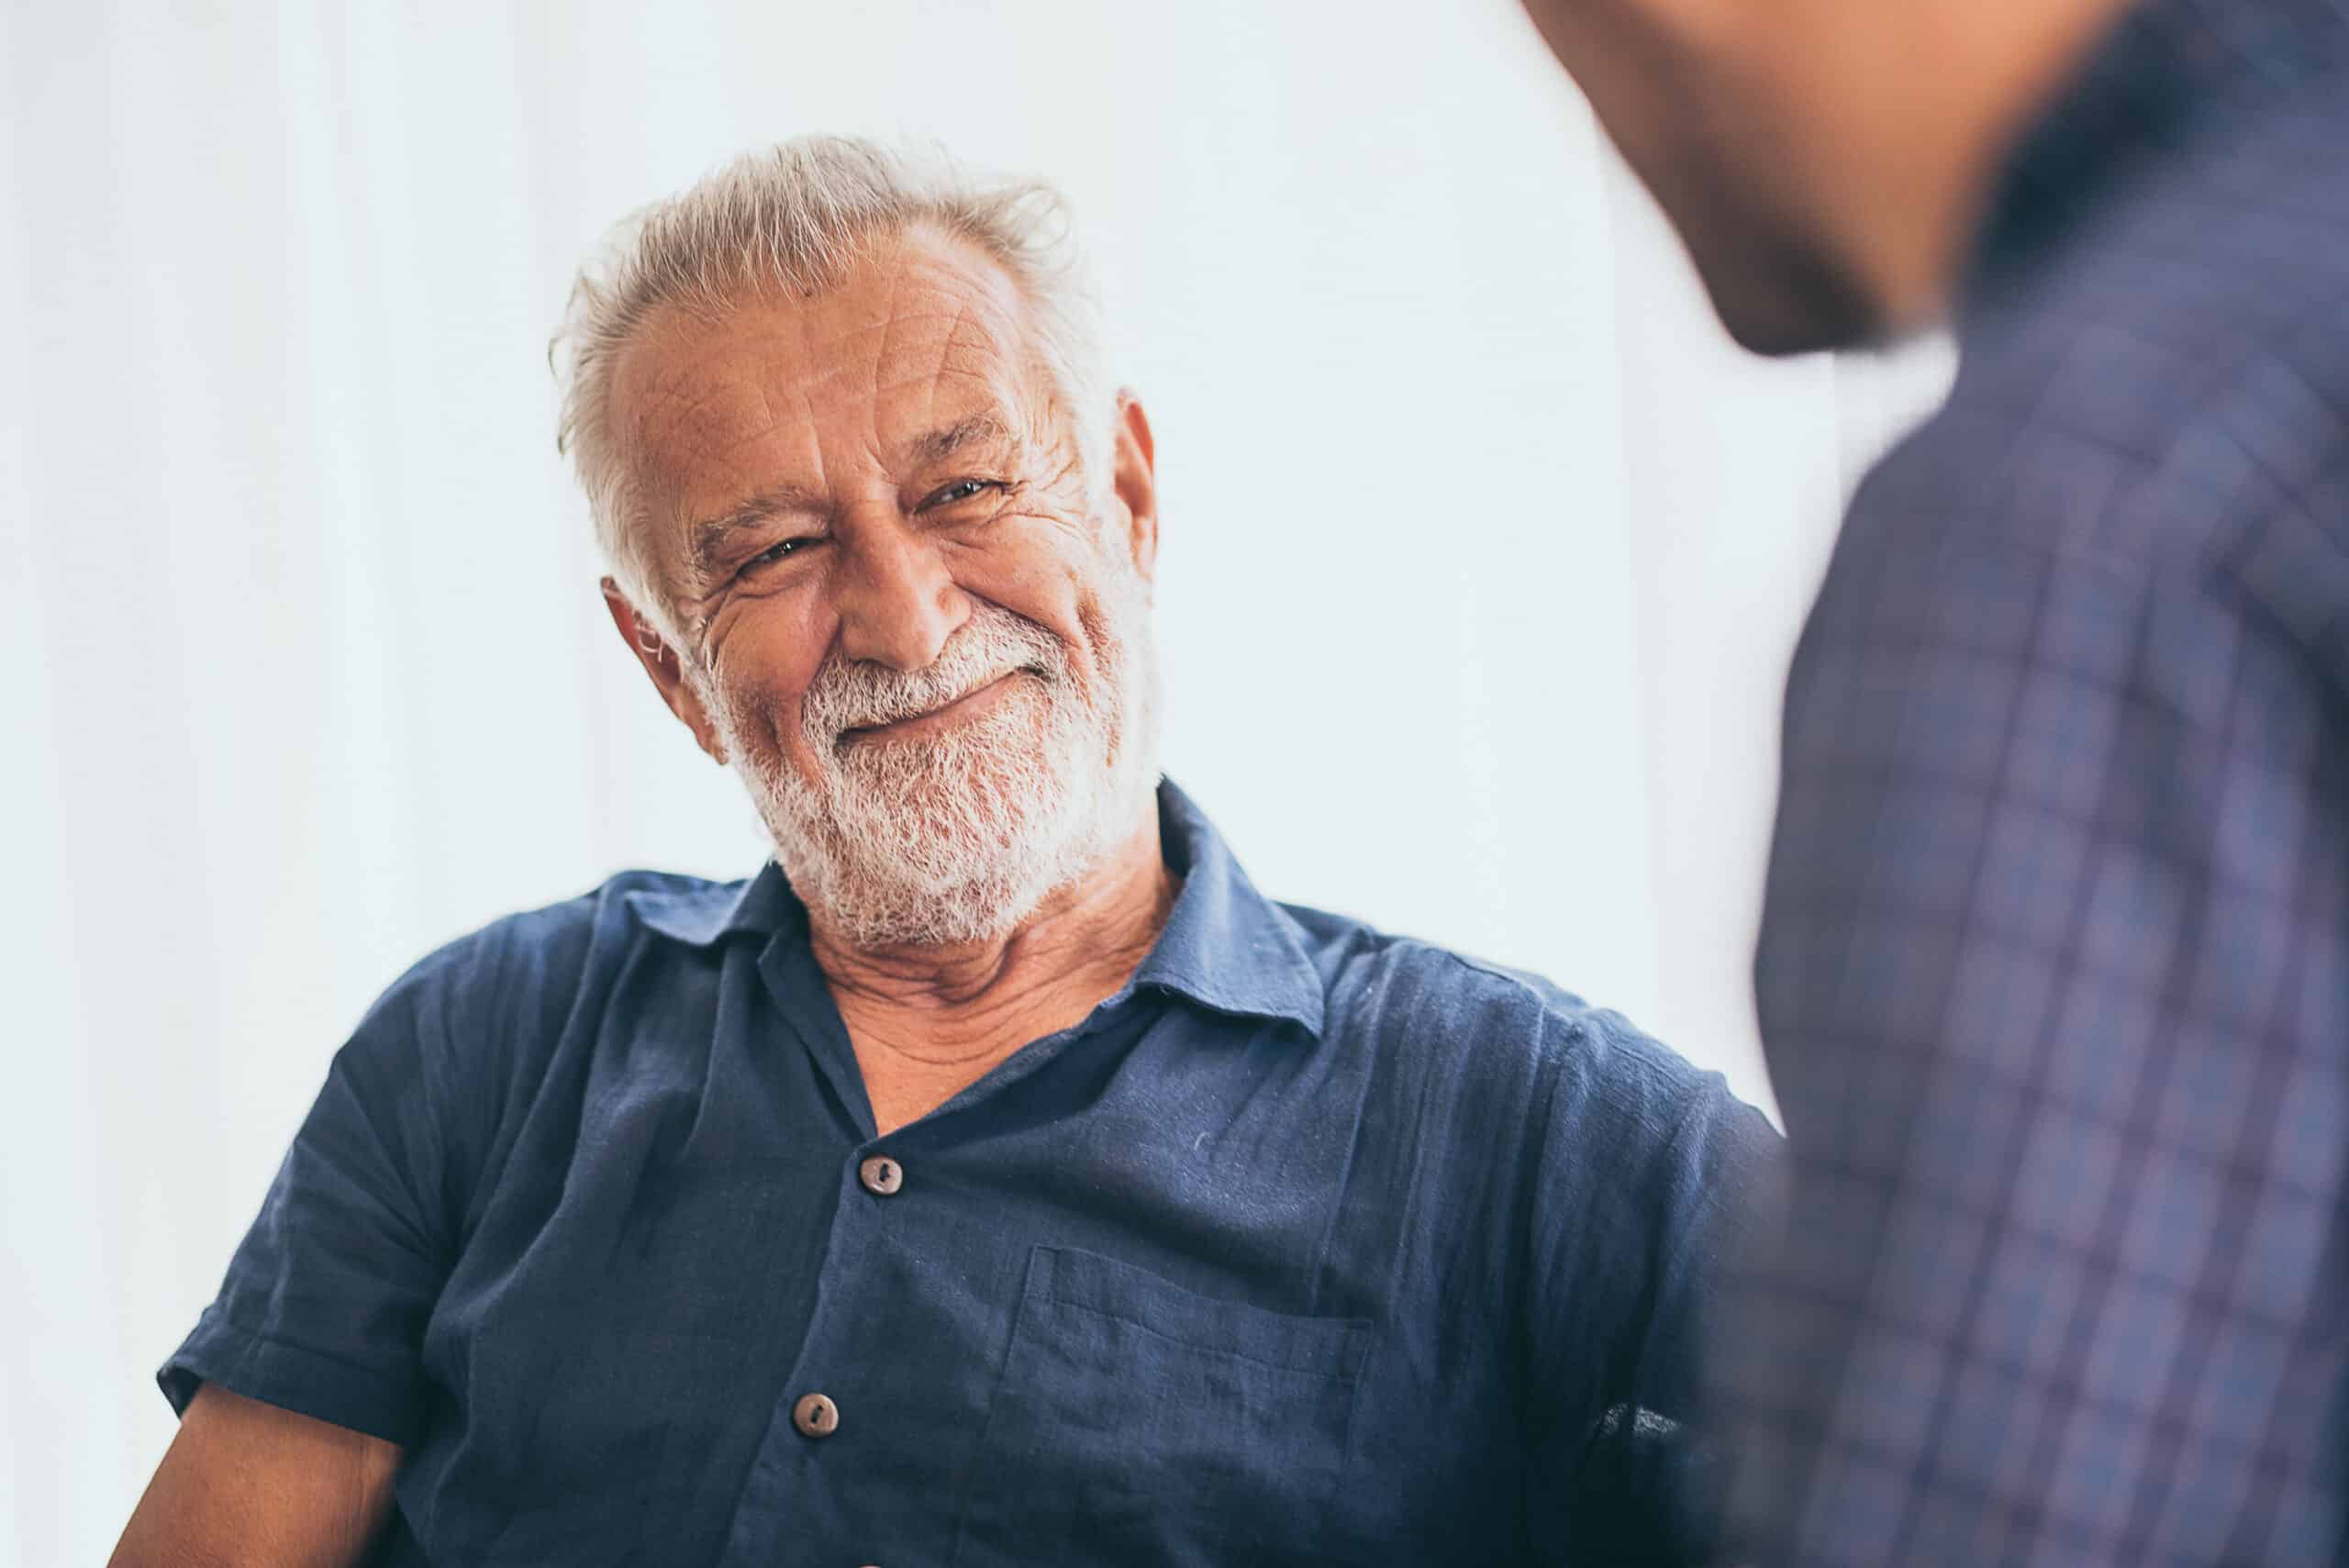 Senior man smiling at a younger man